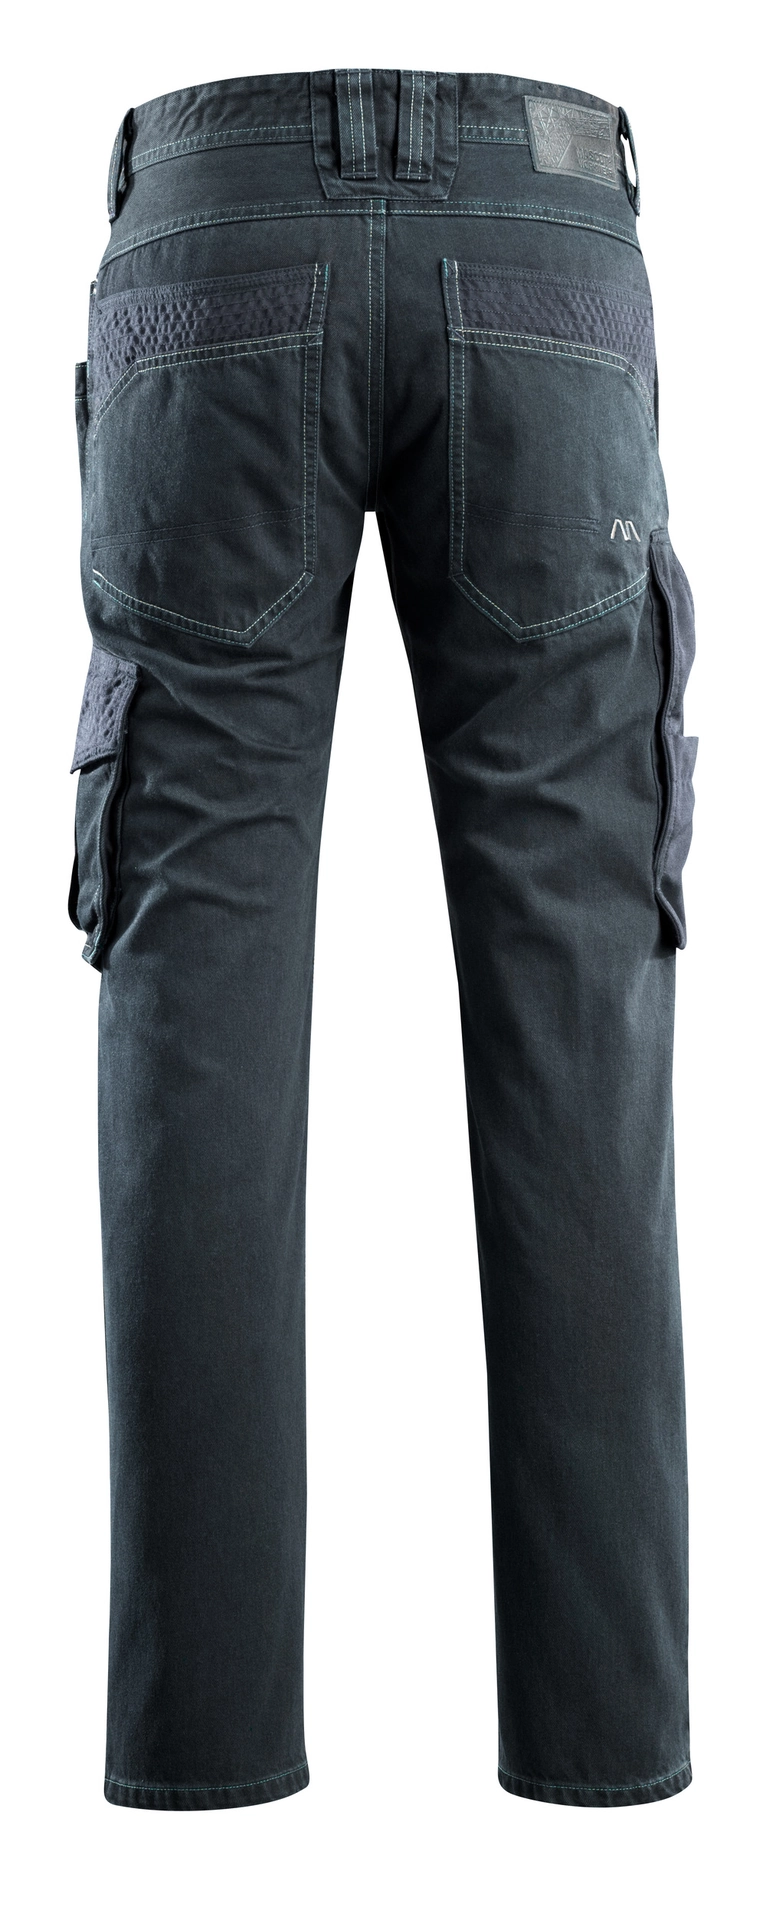 MASCOT® Navia Jeans Größe W29L34, dunkelblauer denim